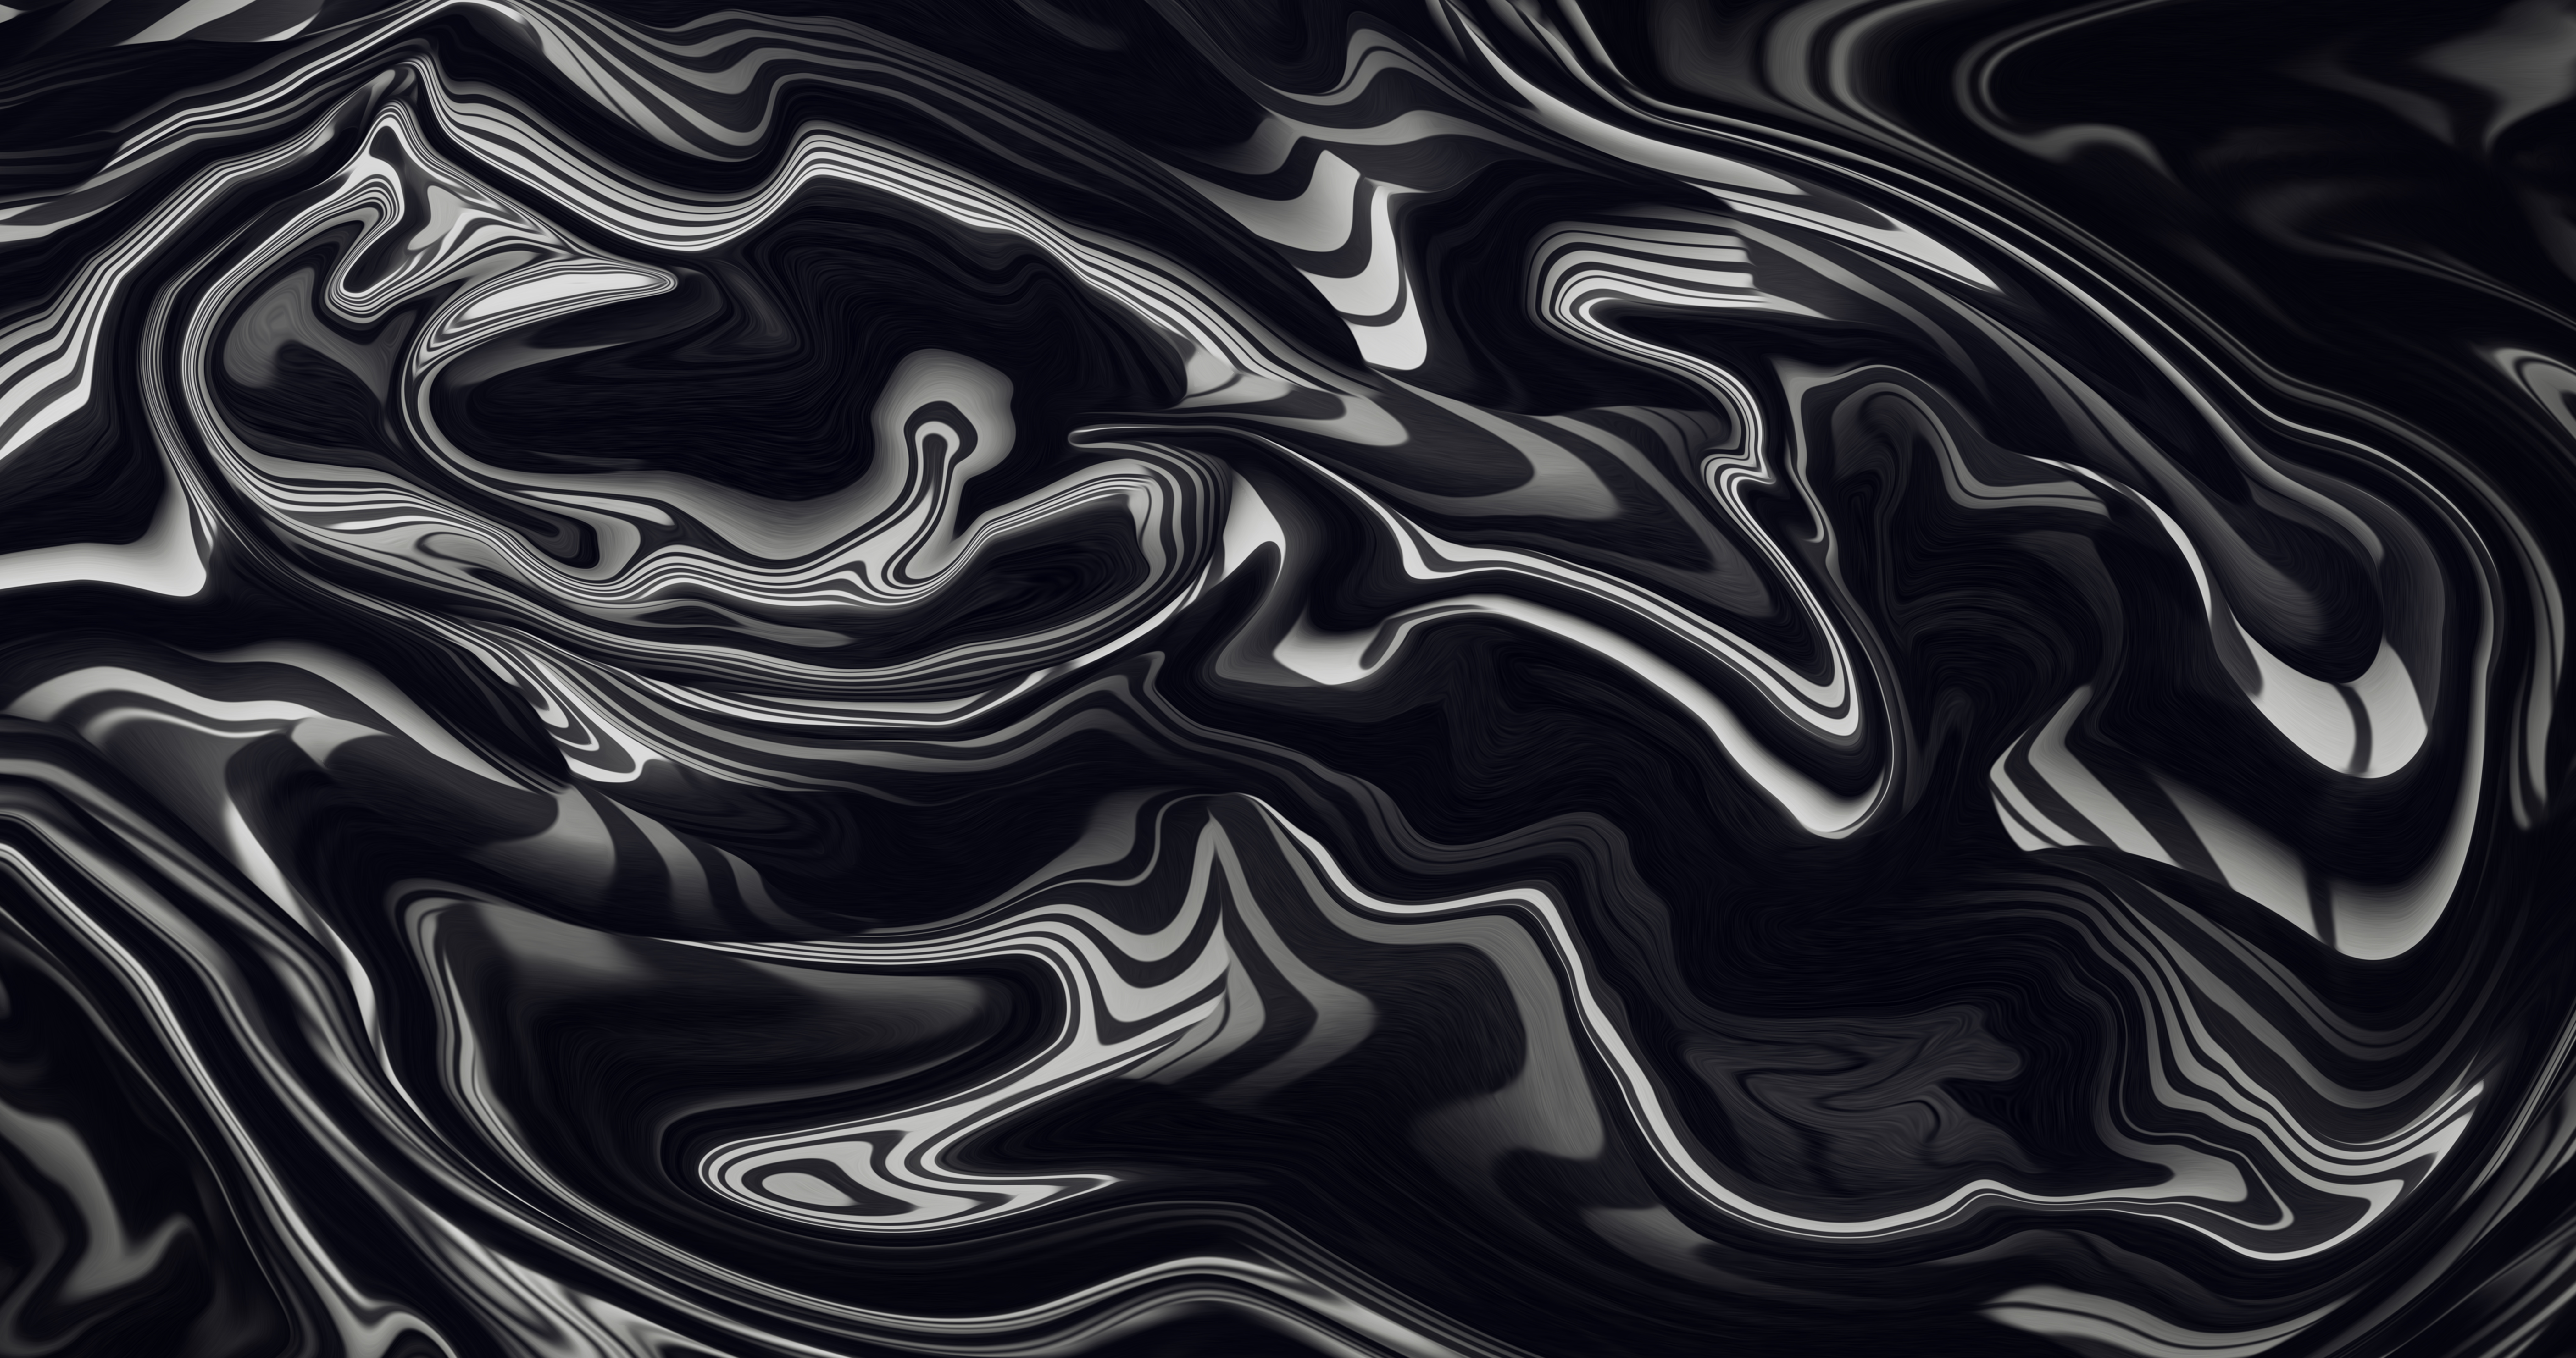 Abstract Shapes Fluid Liquid Artwork Digital Art 8 K Monochrome Illusion 8192x4320